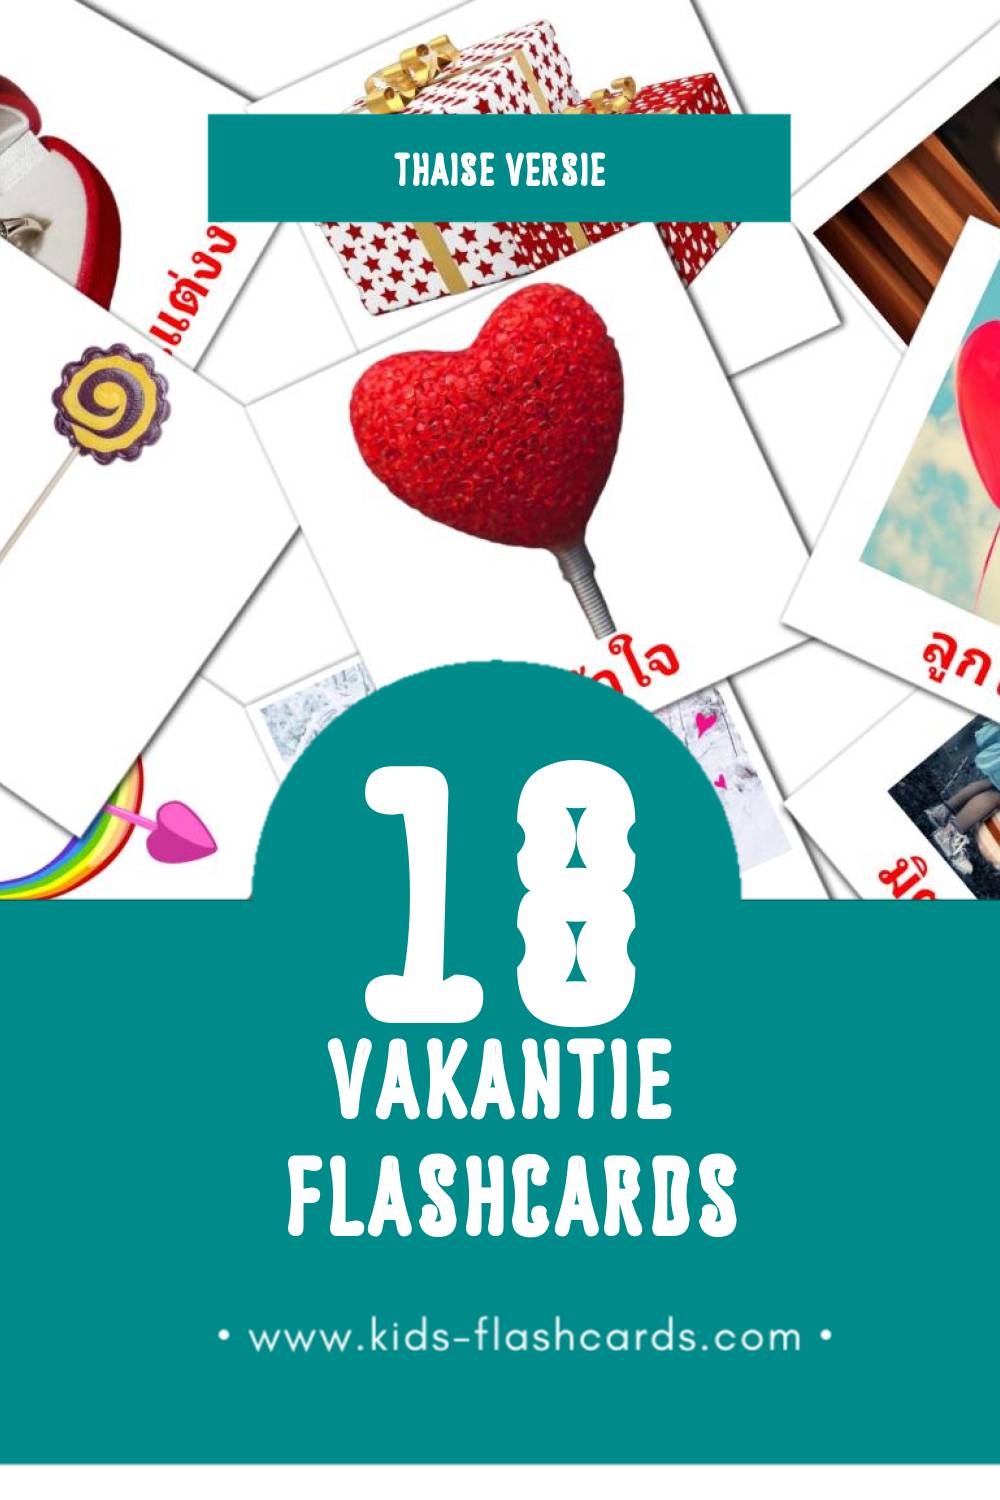 Visuele วัน หยุด Flashcards voor Kleuters (18 kaarten in het Thais)